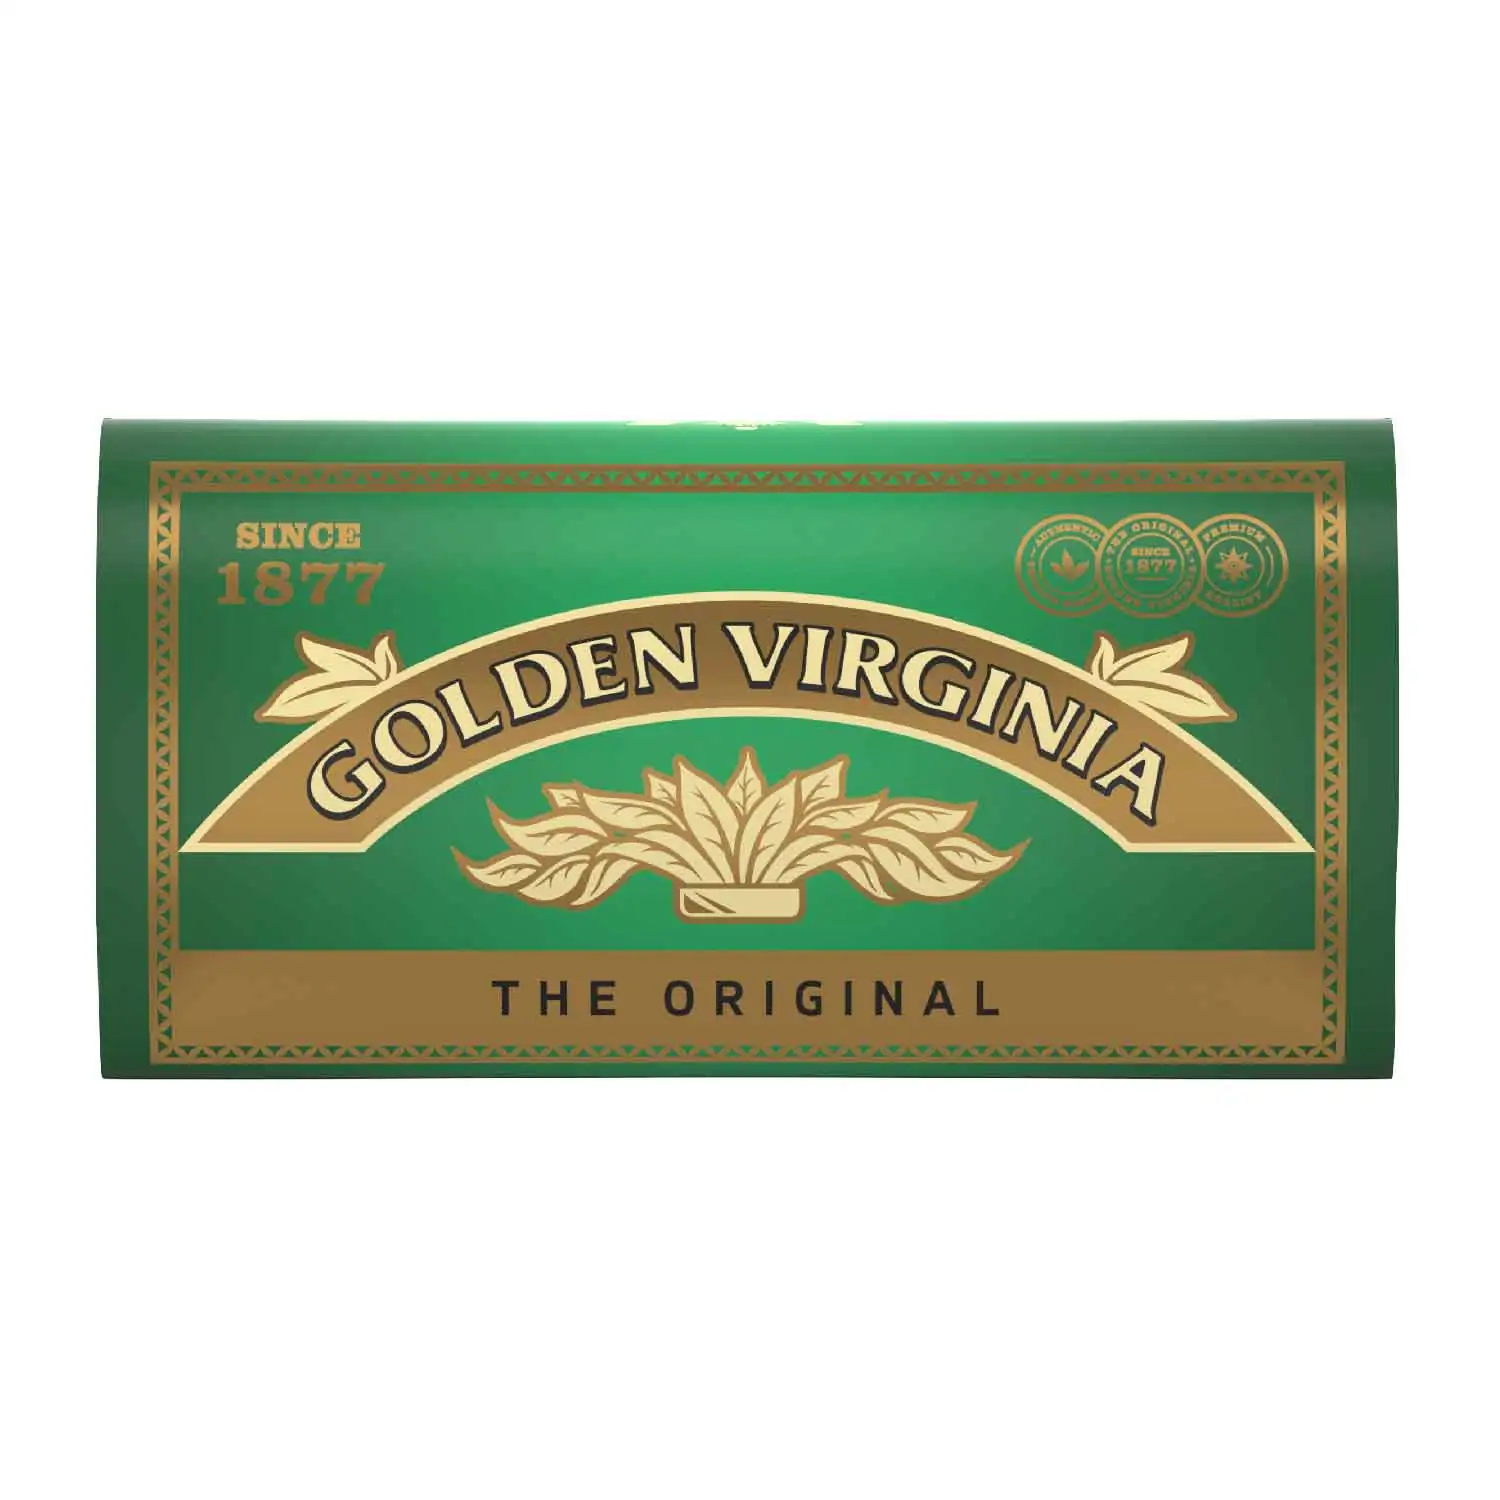 Golden Virginia original 50g - Buy at Real Tobacco